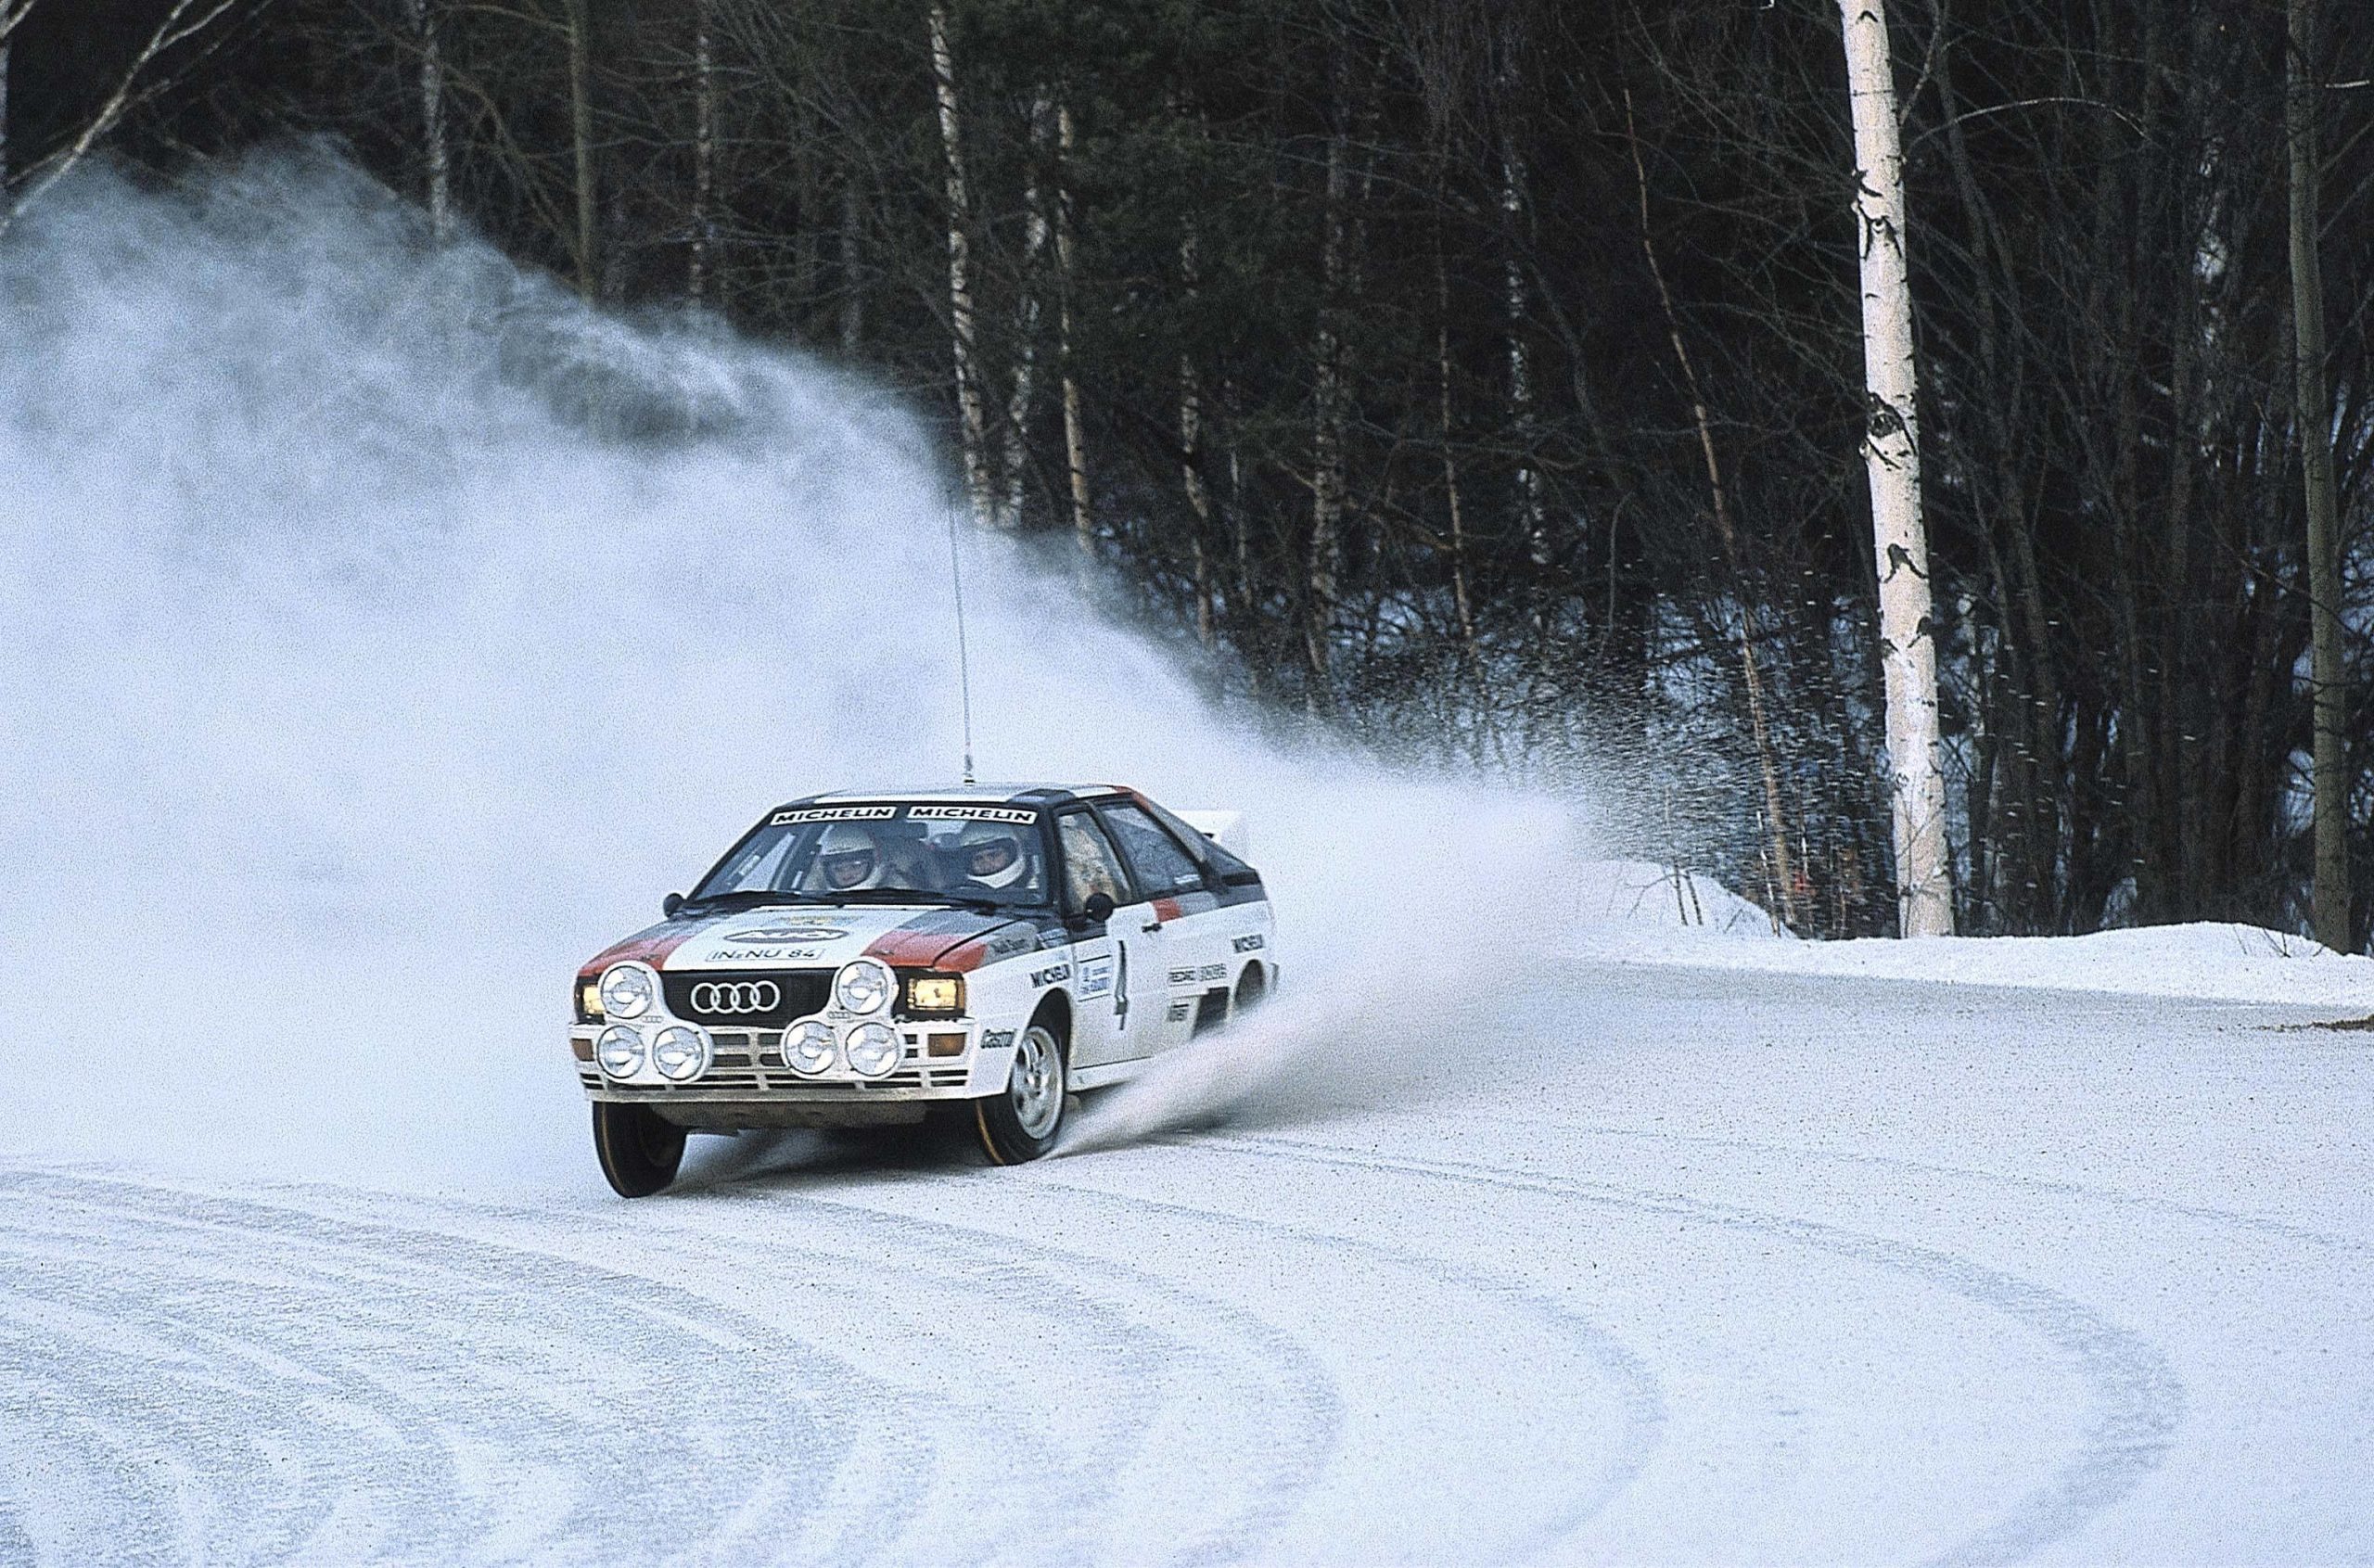 1981: Audi revolutionized the World Rally Championship with the "original" quattro